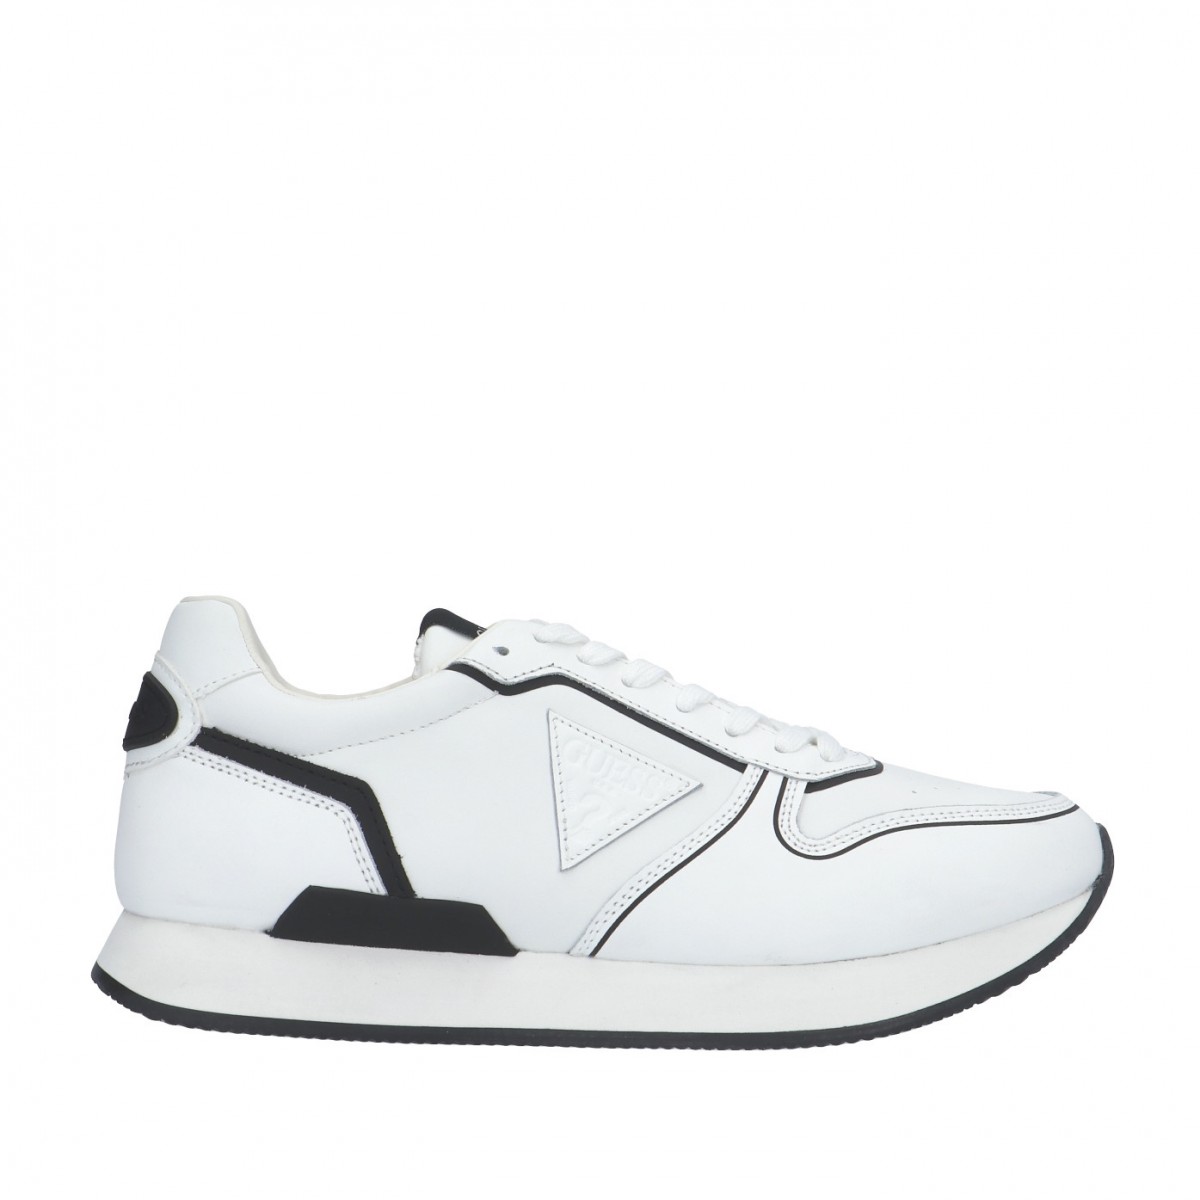 Guess Sneaker Bianco/nero...